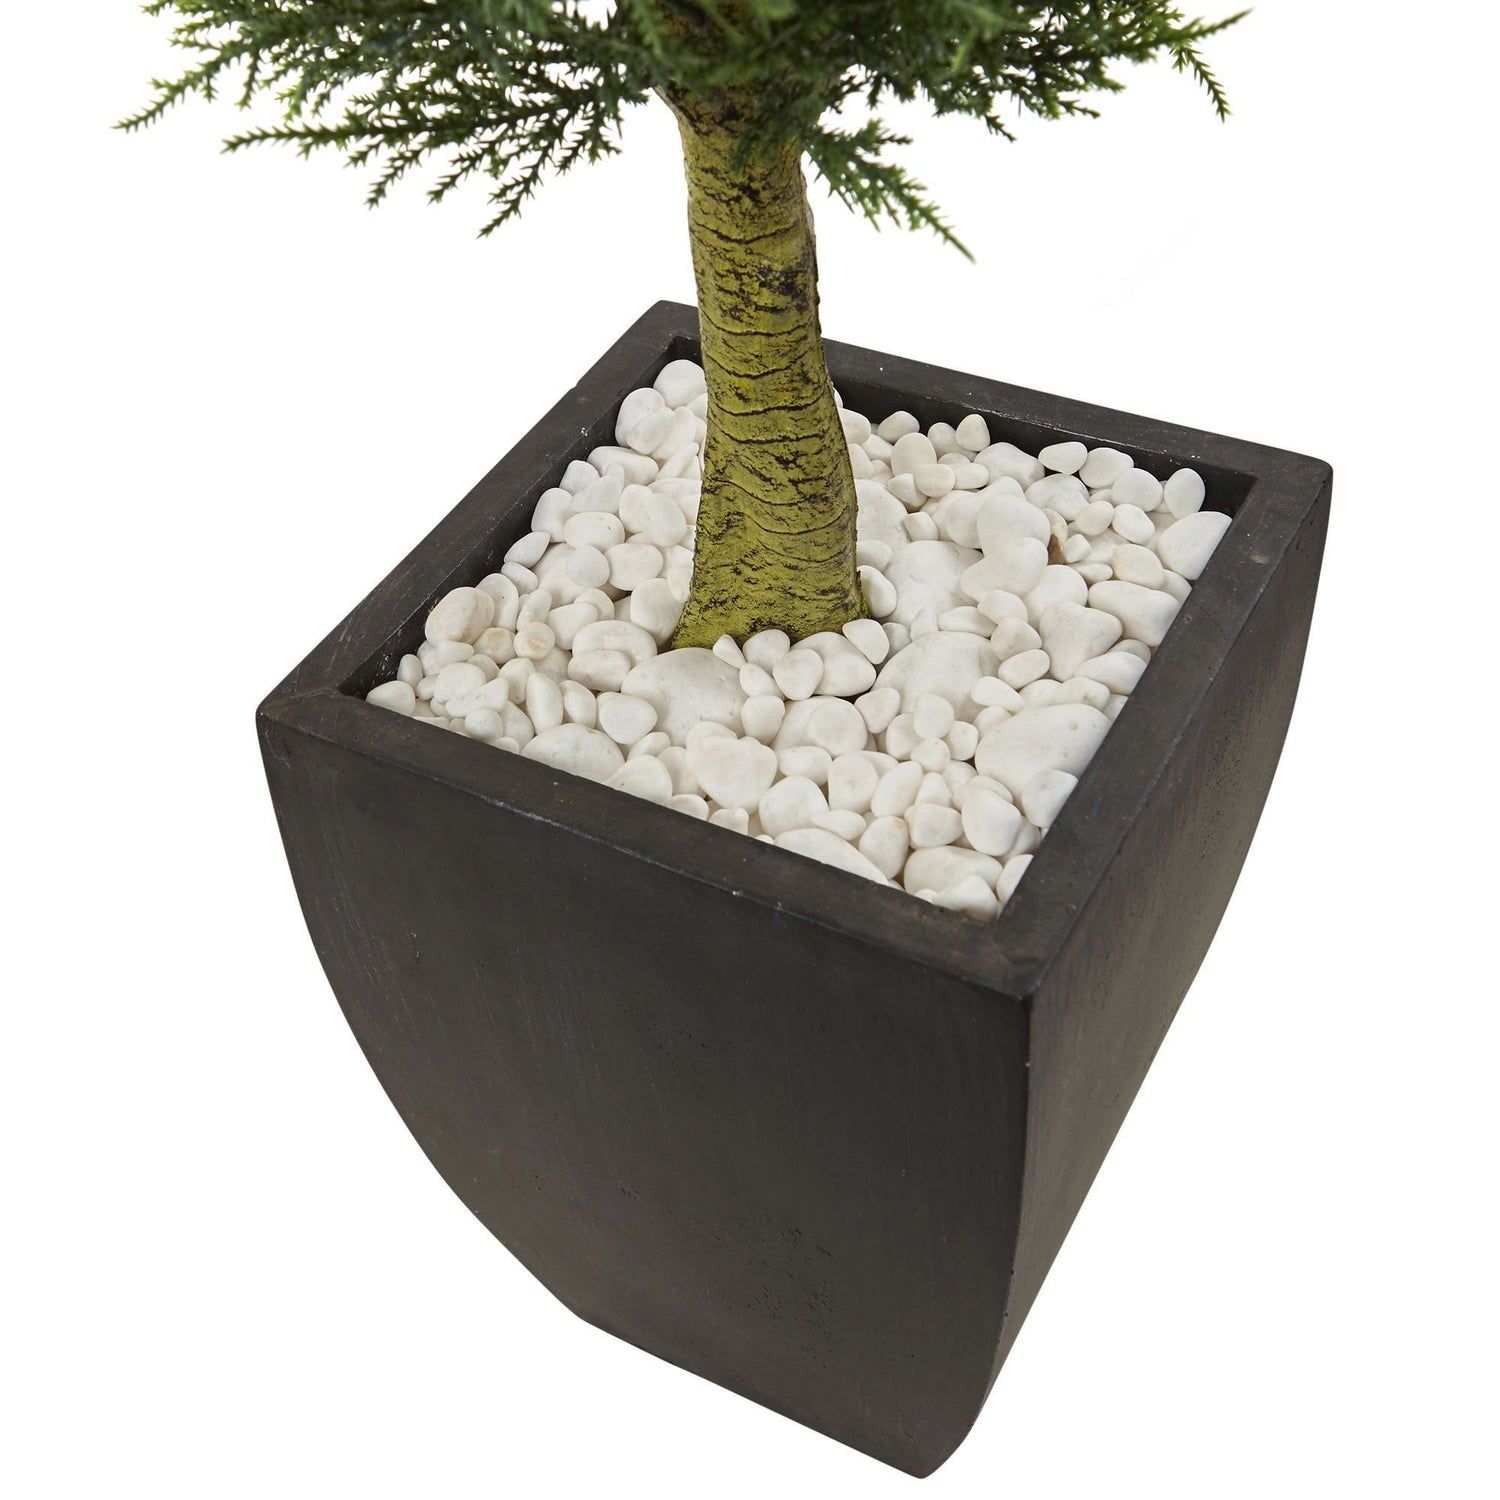 Cypress Topiary with Black Planter UV Resistant (Indoor/Outdoor)